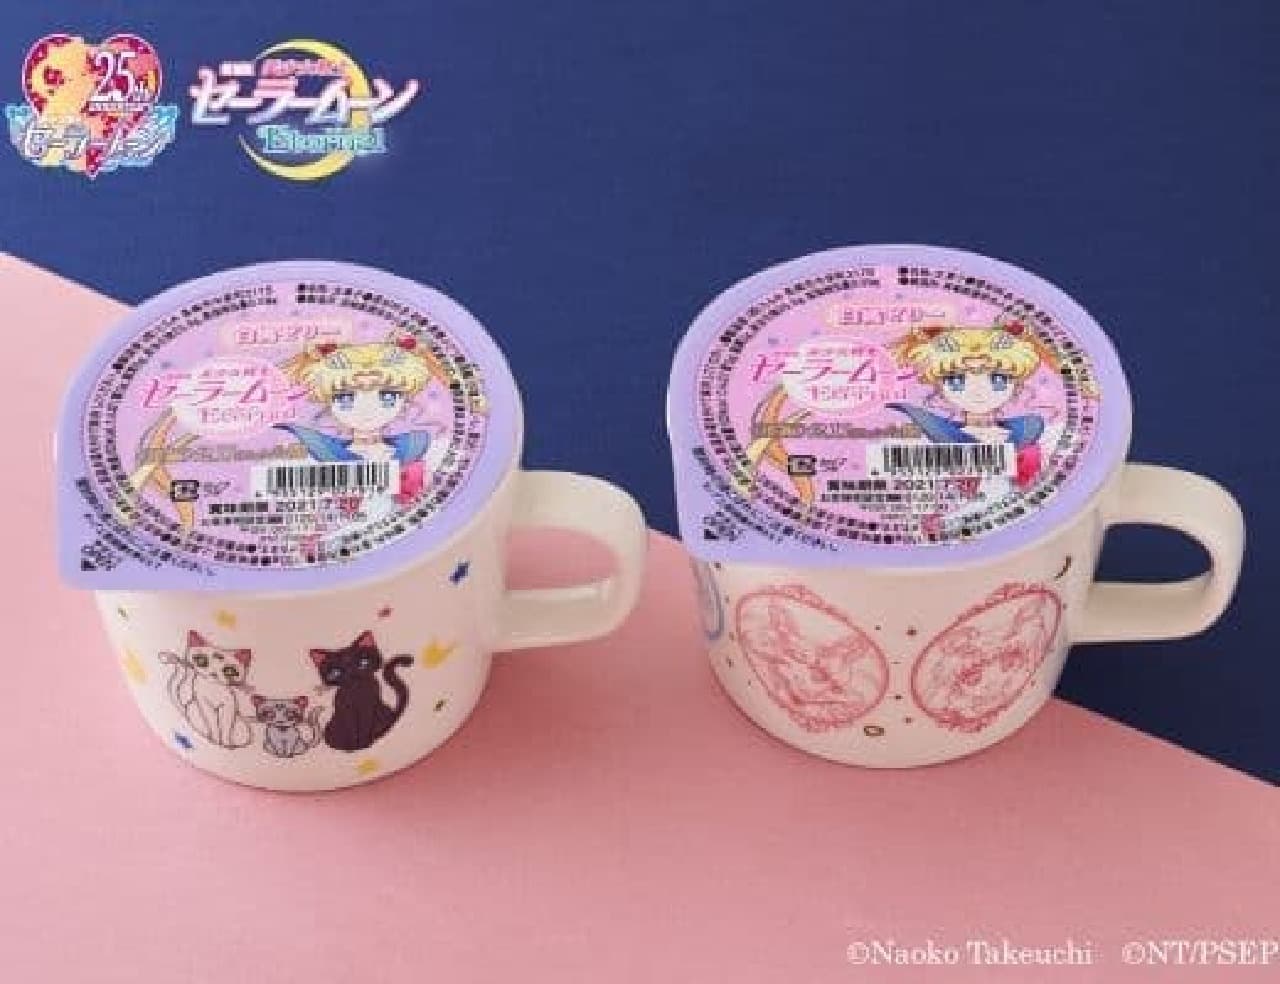 Movie version "Sailor Moon Eternal" mug & white peach jelly 420g